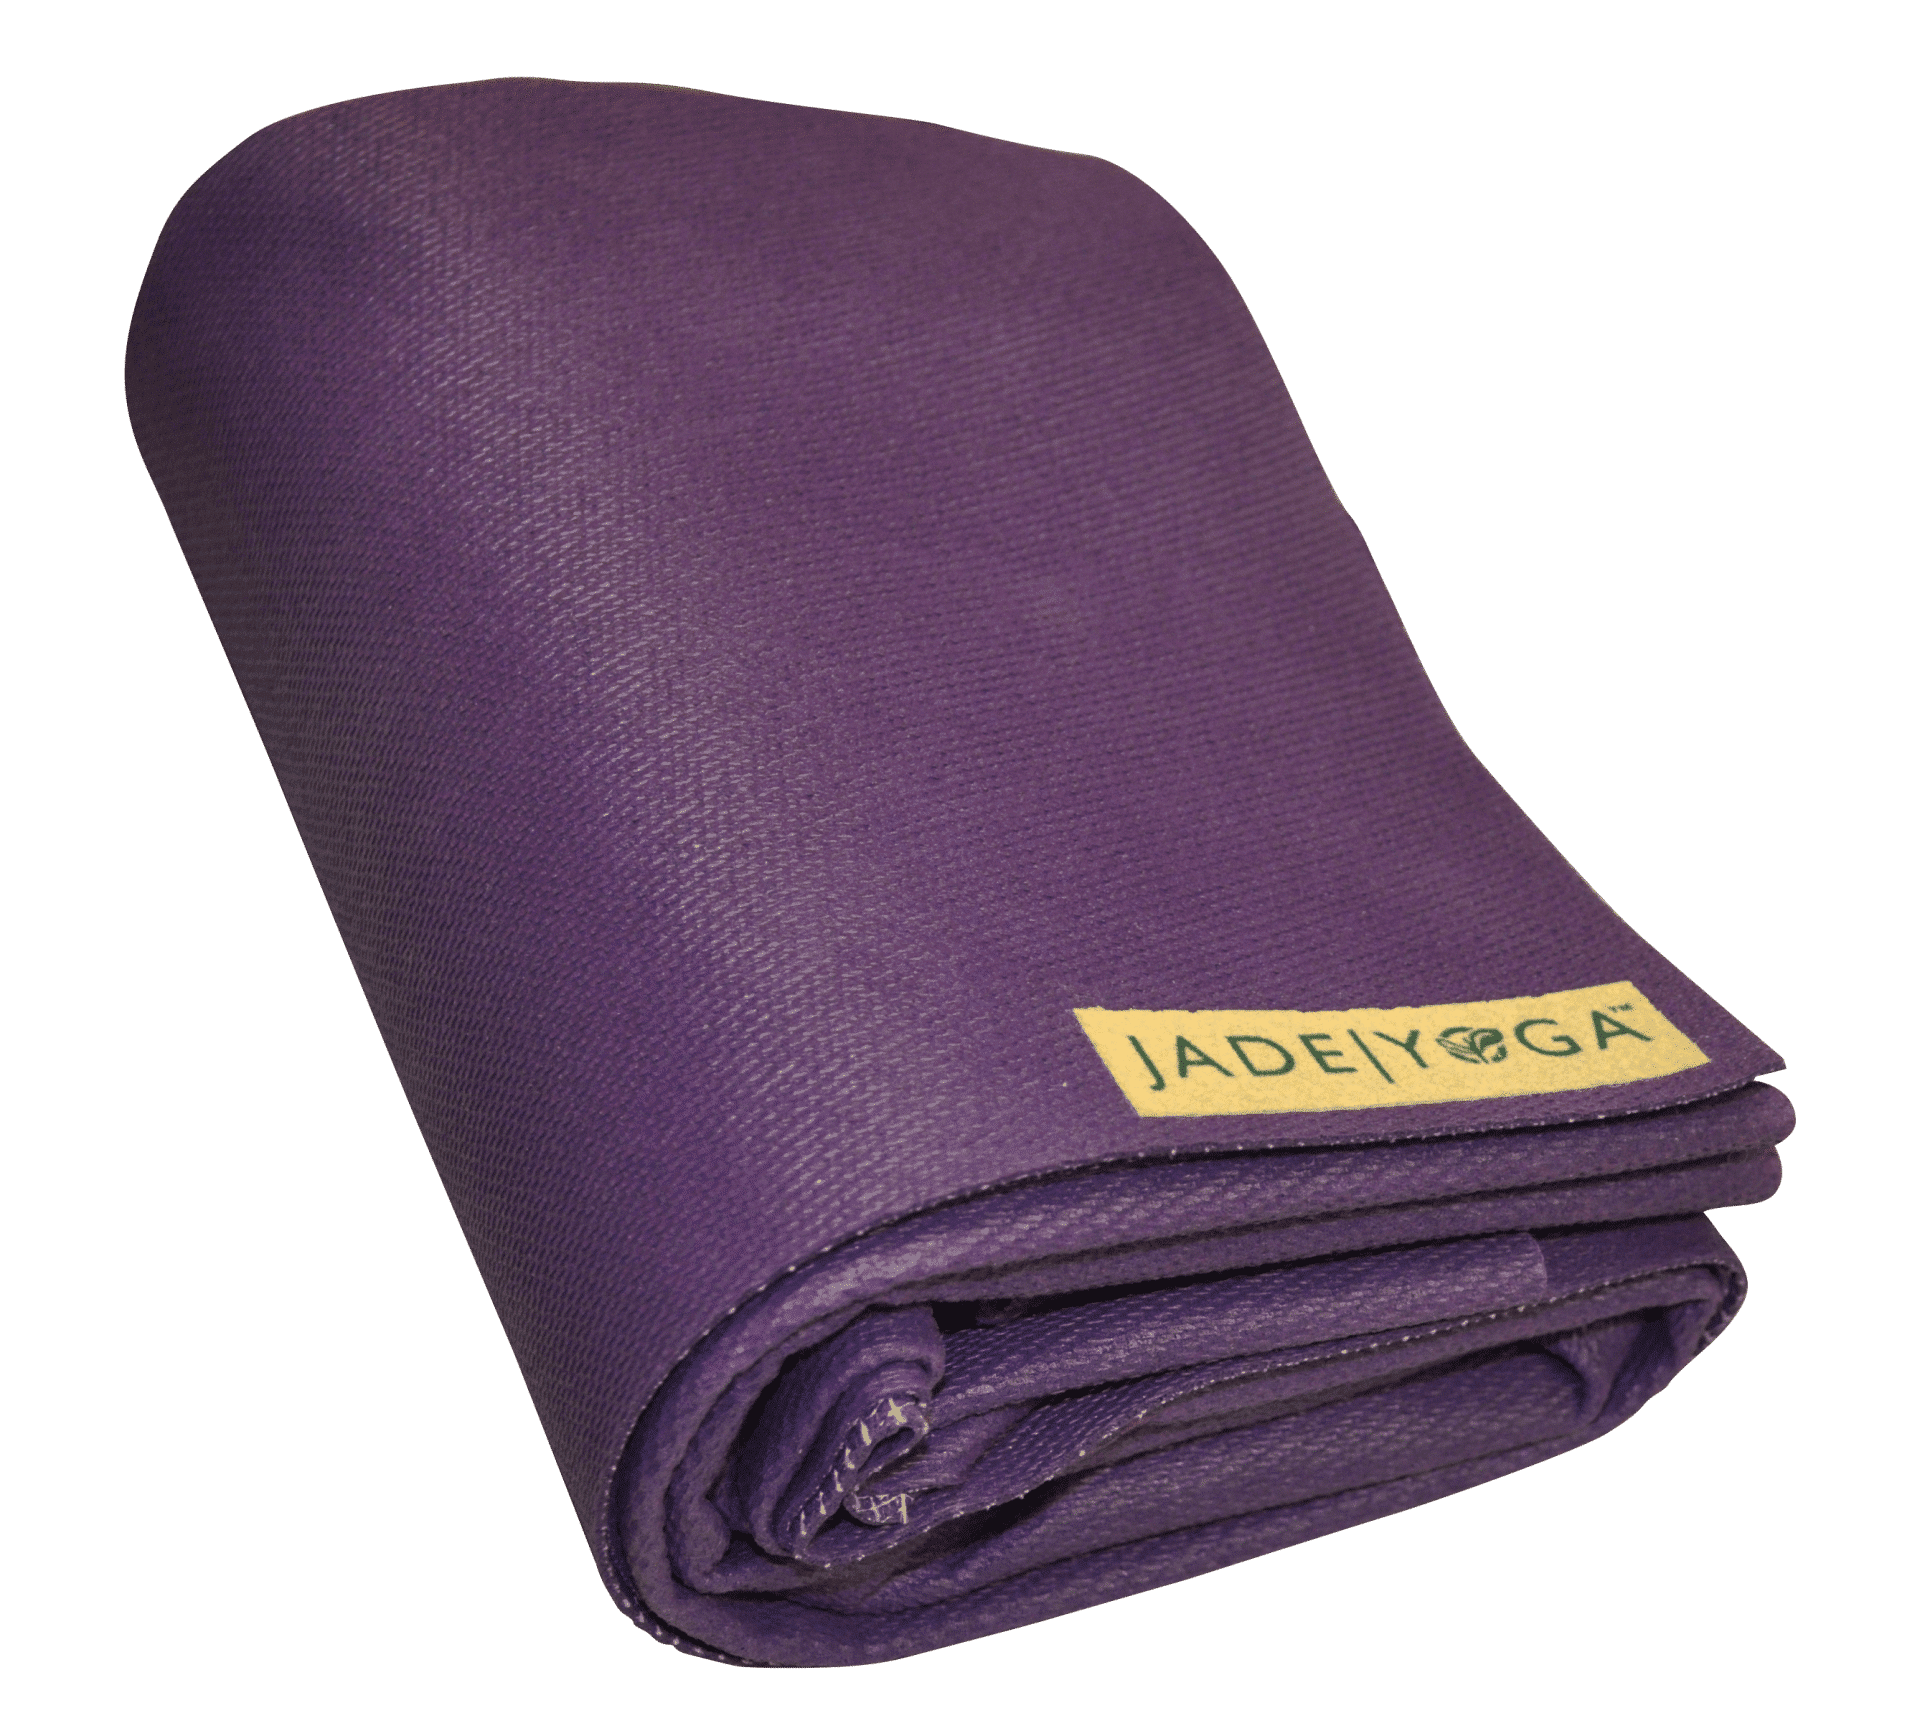 Jade Voyager Purple folded